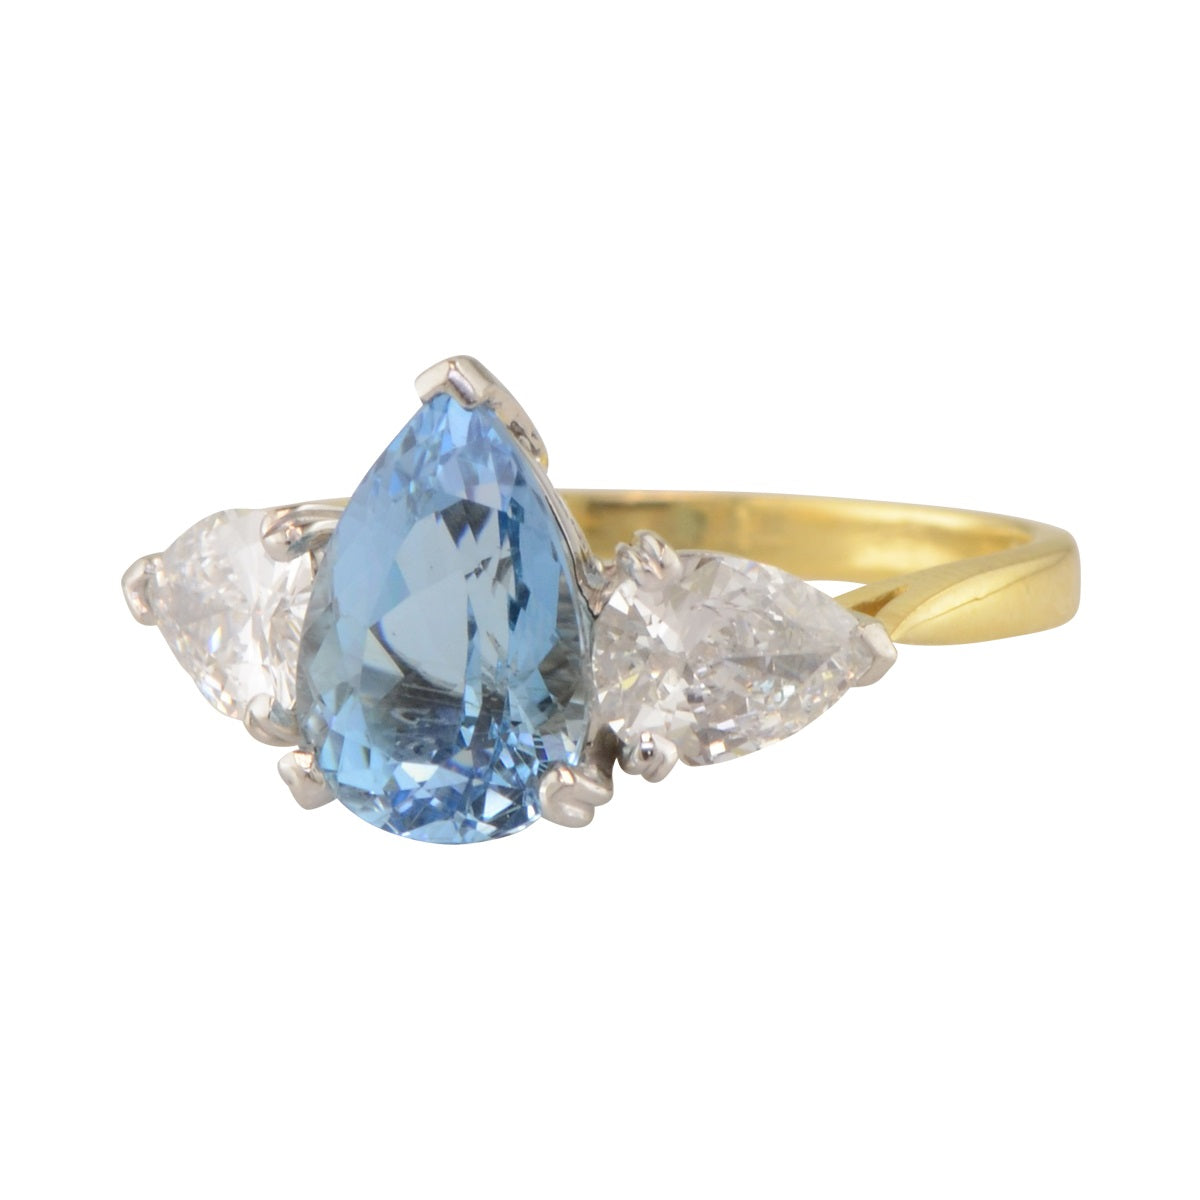 Pear Shaped Aquamarine Ring 'Bridgette' with Pear Shaped Diamond Sides. 